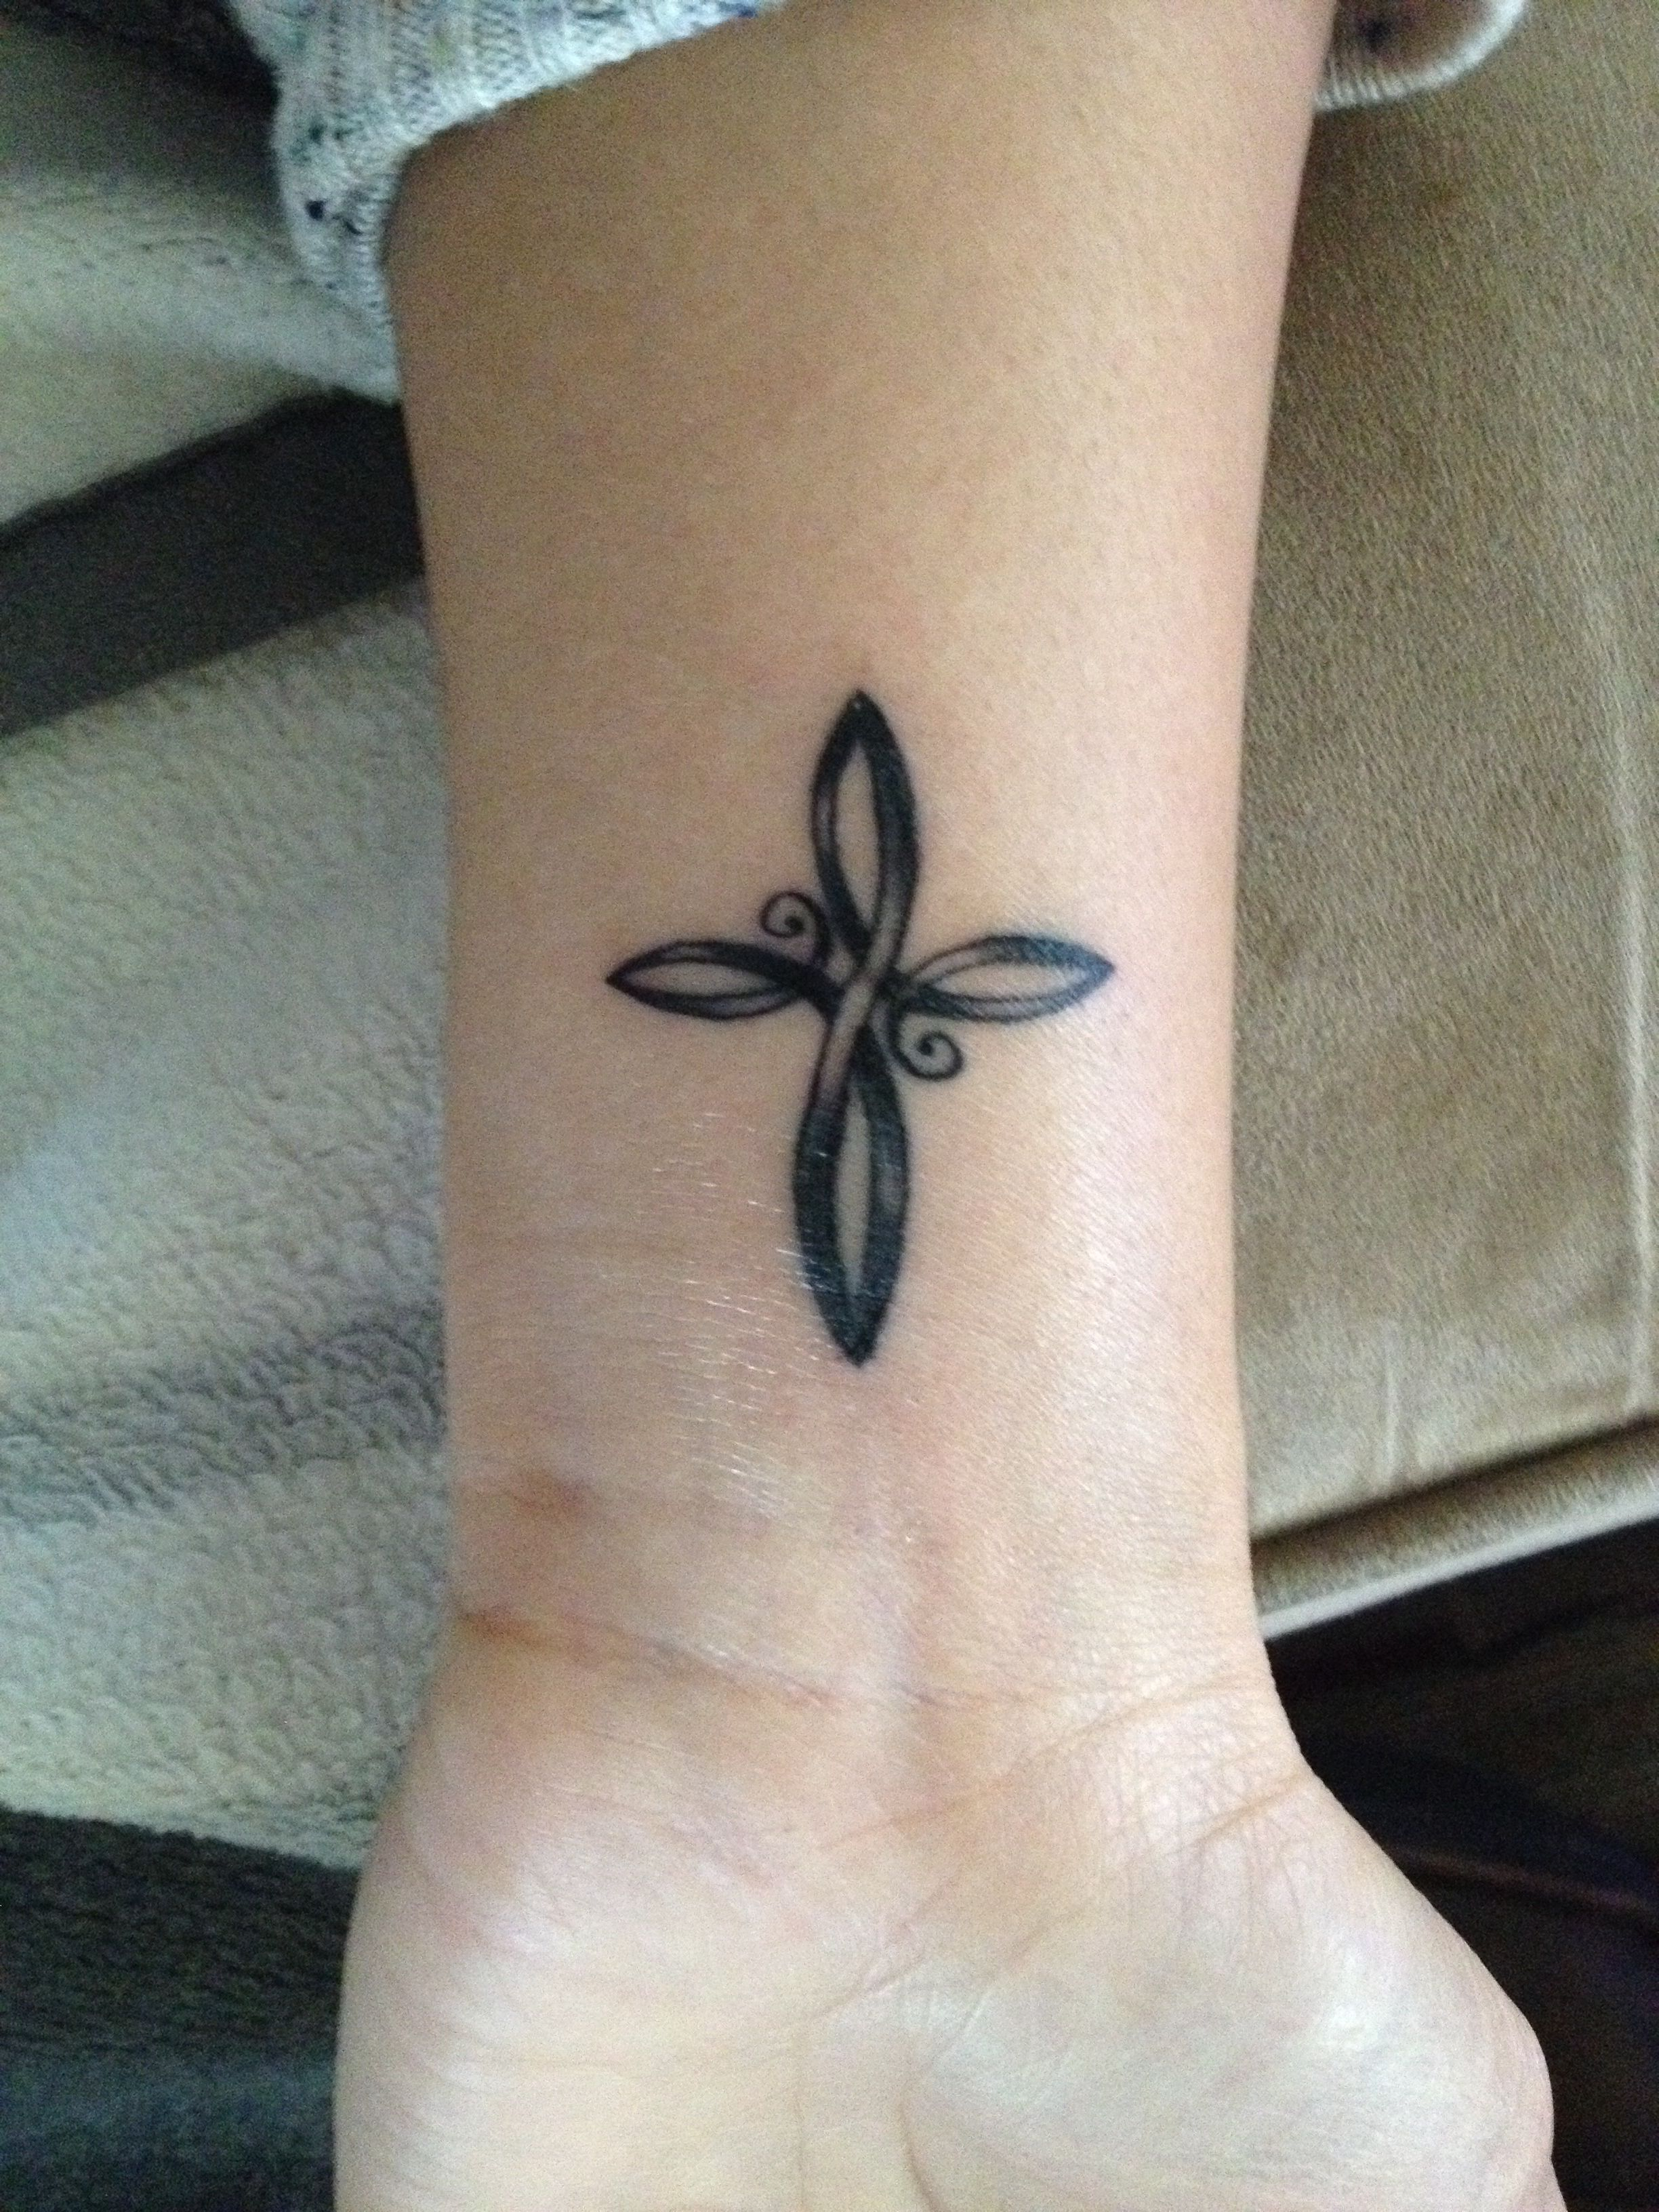 My Infinity Cross Absolutely Love It Tattoo Infinity Tattoos regarding dimensions 2448 X 3264